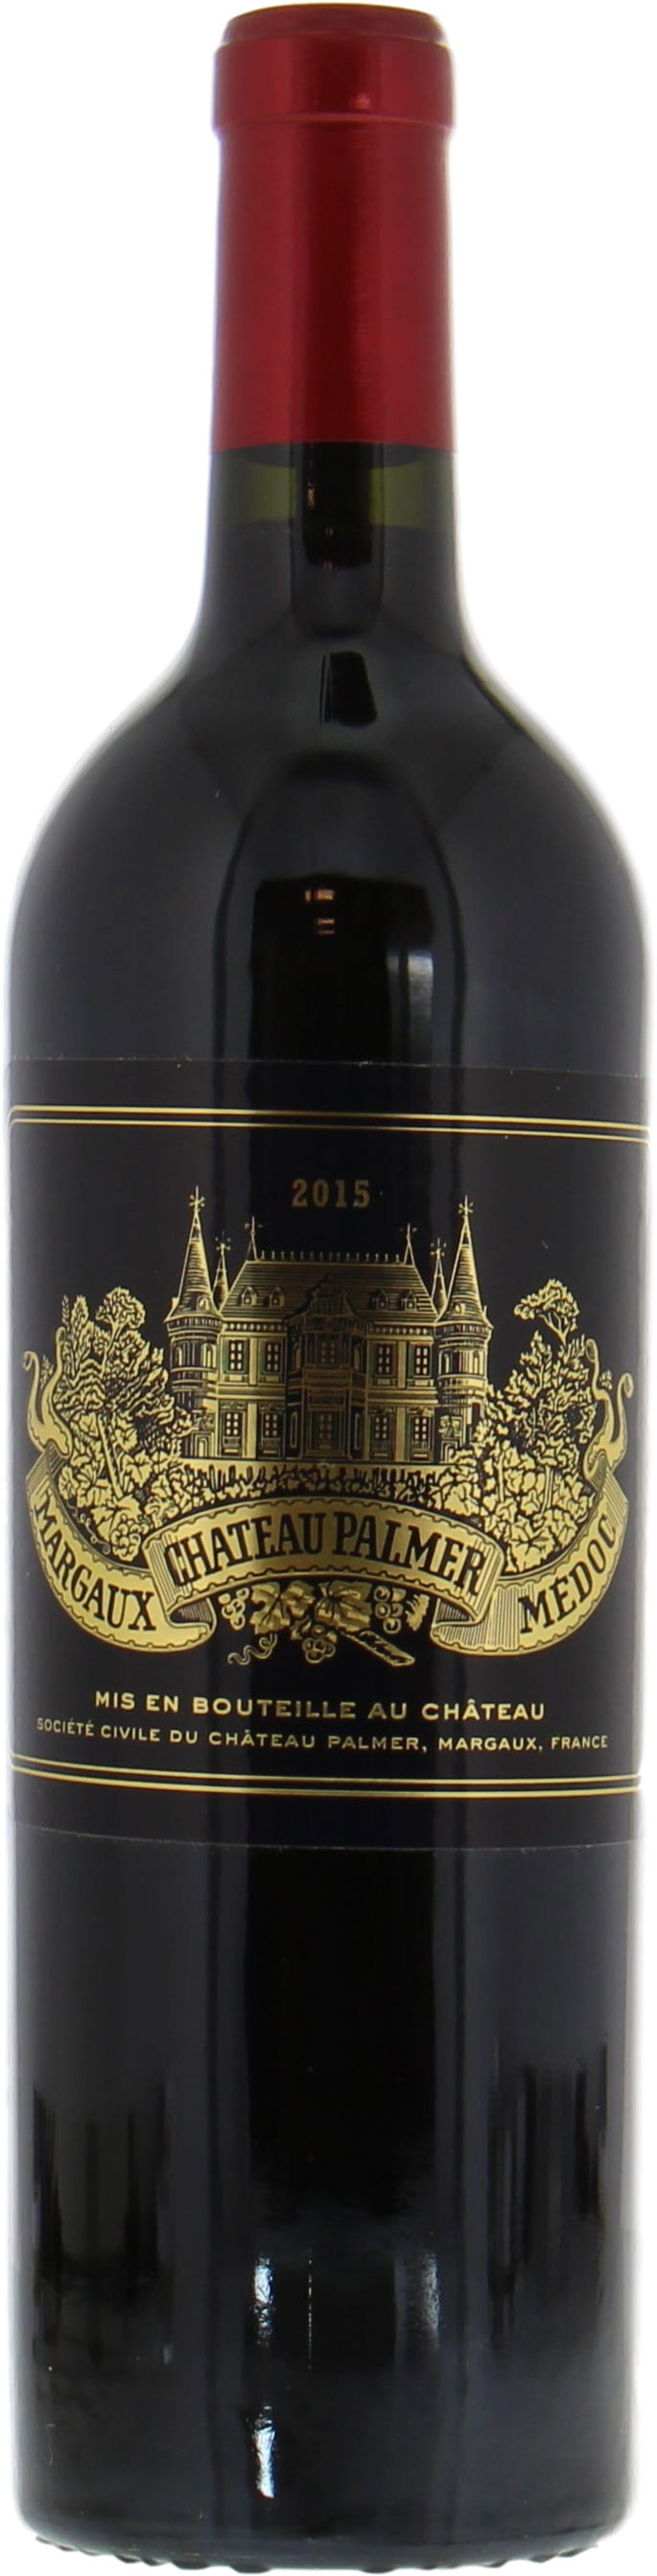 Chateau Palmer - Chateau Palmer 2015